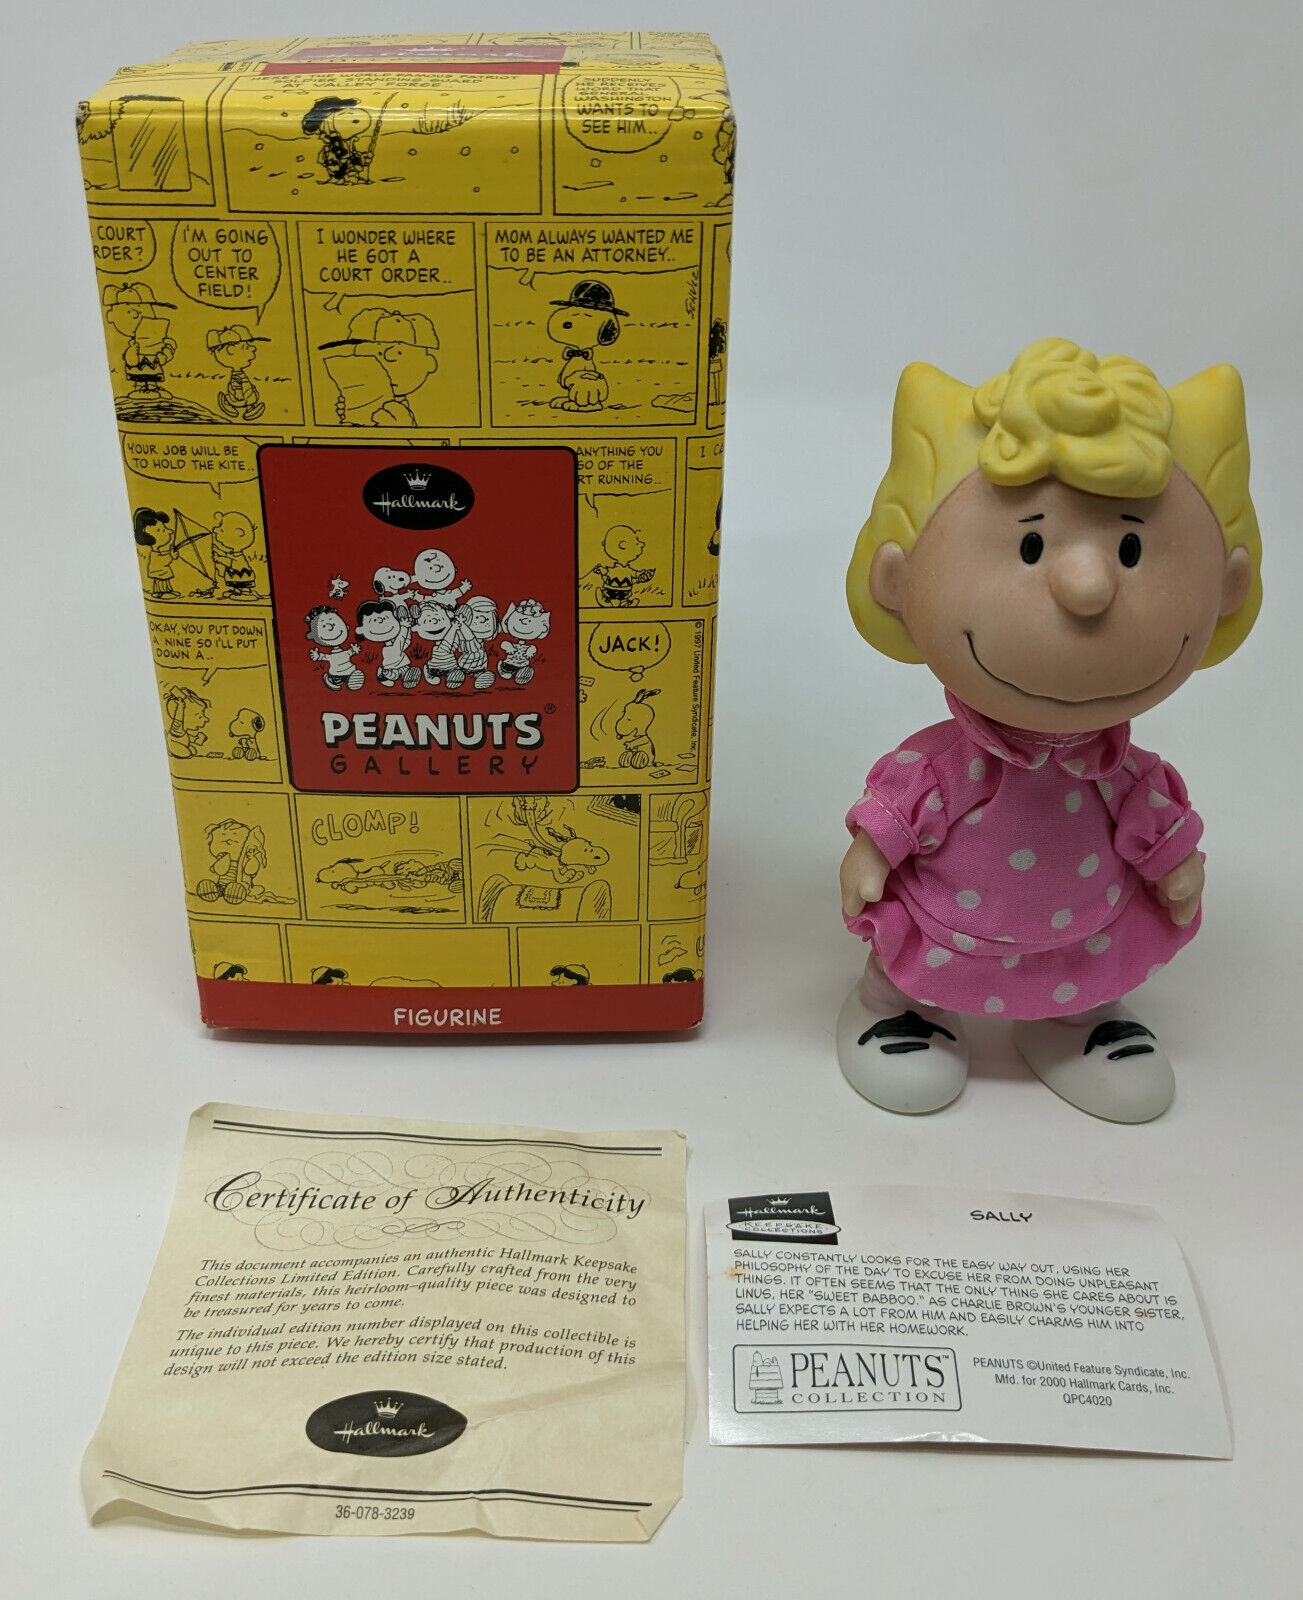 Vtg Hallmark Peanuts Gallery Sally Jointed Figurine w Box QPC4020 LIMITED